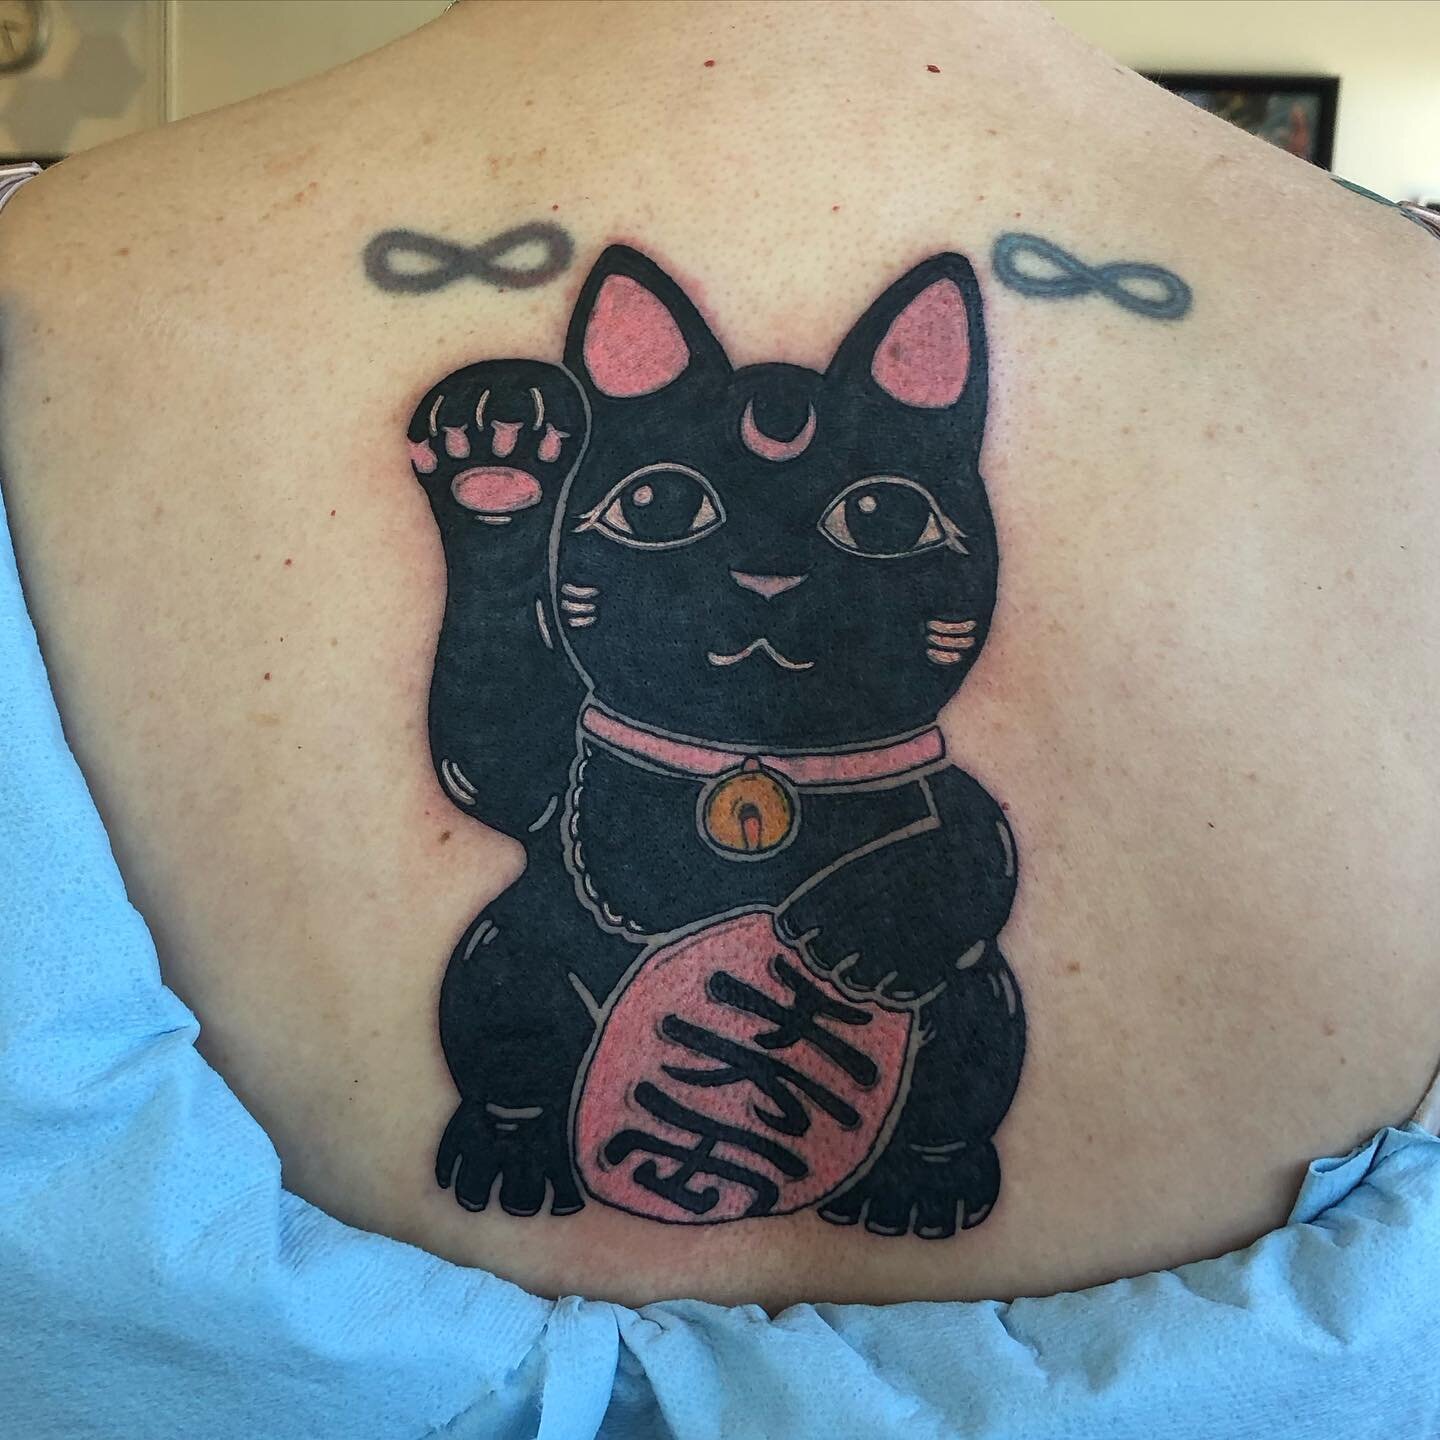 Coverup maneki-neko beckoning cat tattoo.
Infinity symbols are not mine: